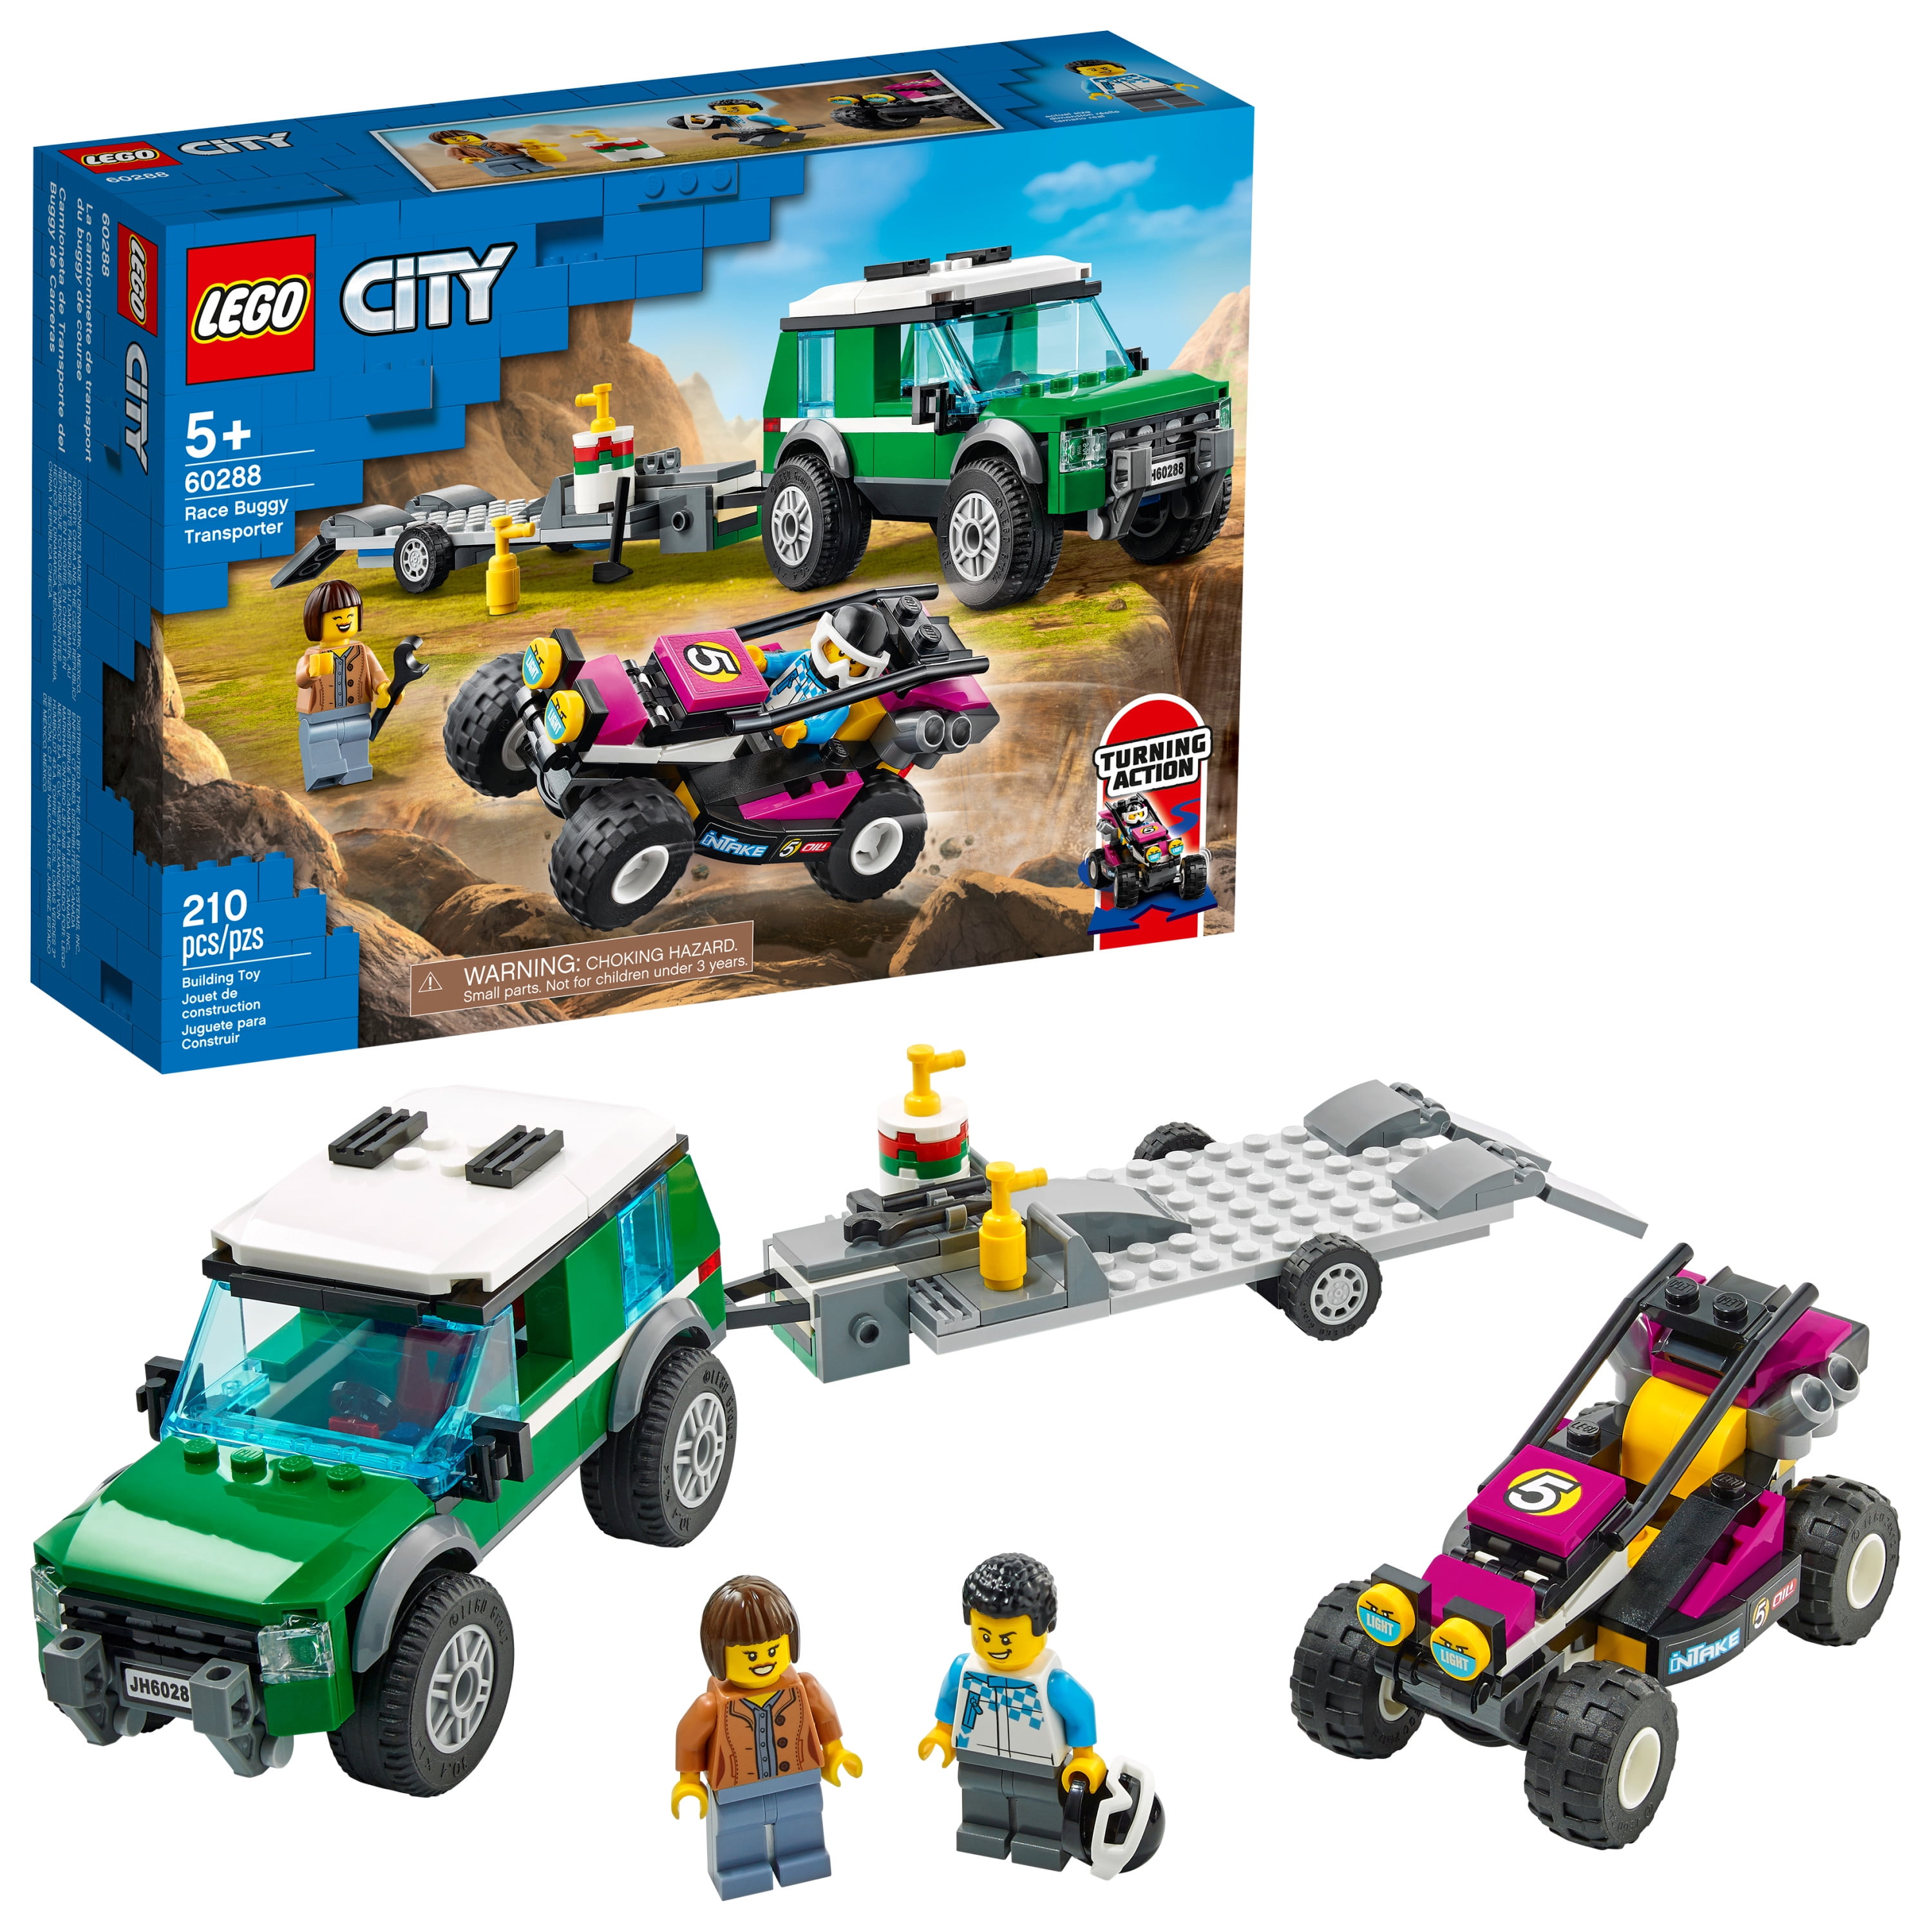 210 Pieces for sale online LEGO City Race Buggy Transporter 60288 Building Kit